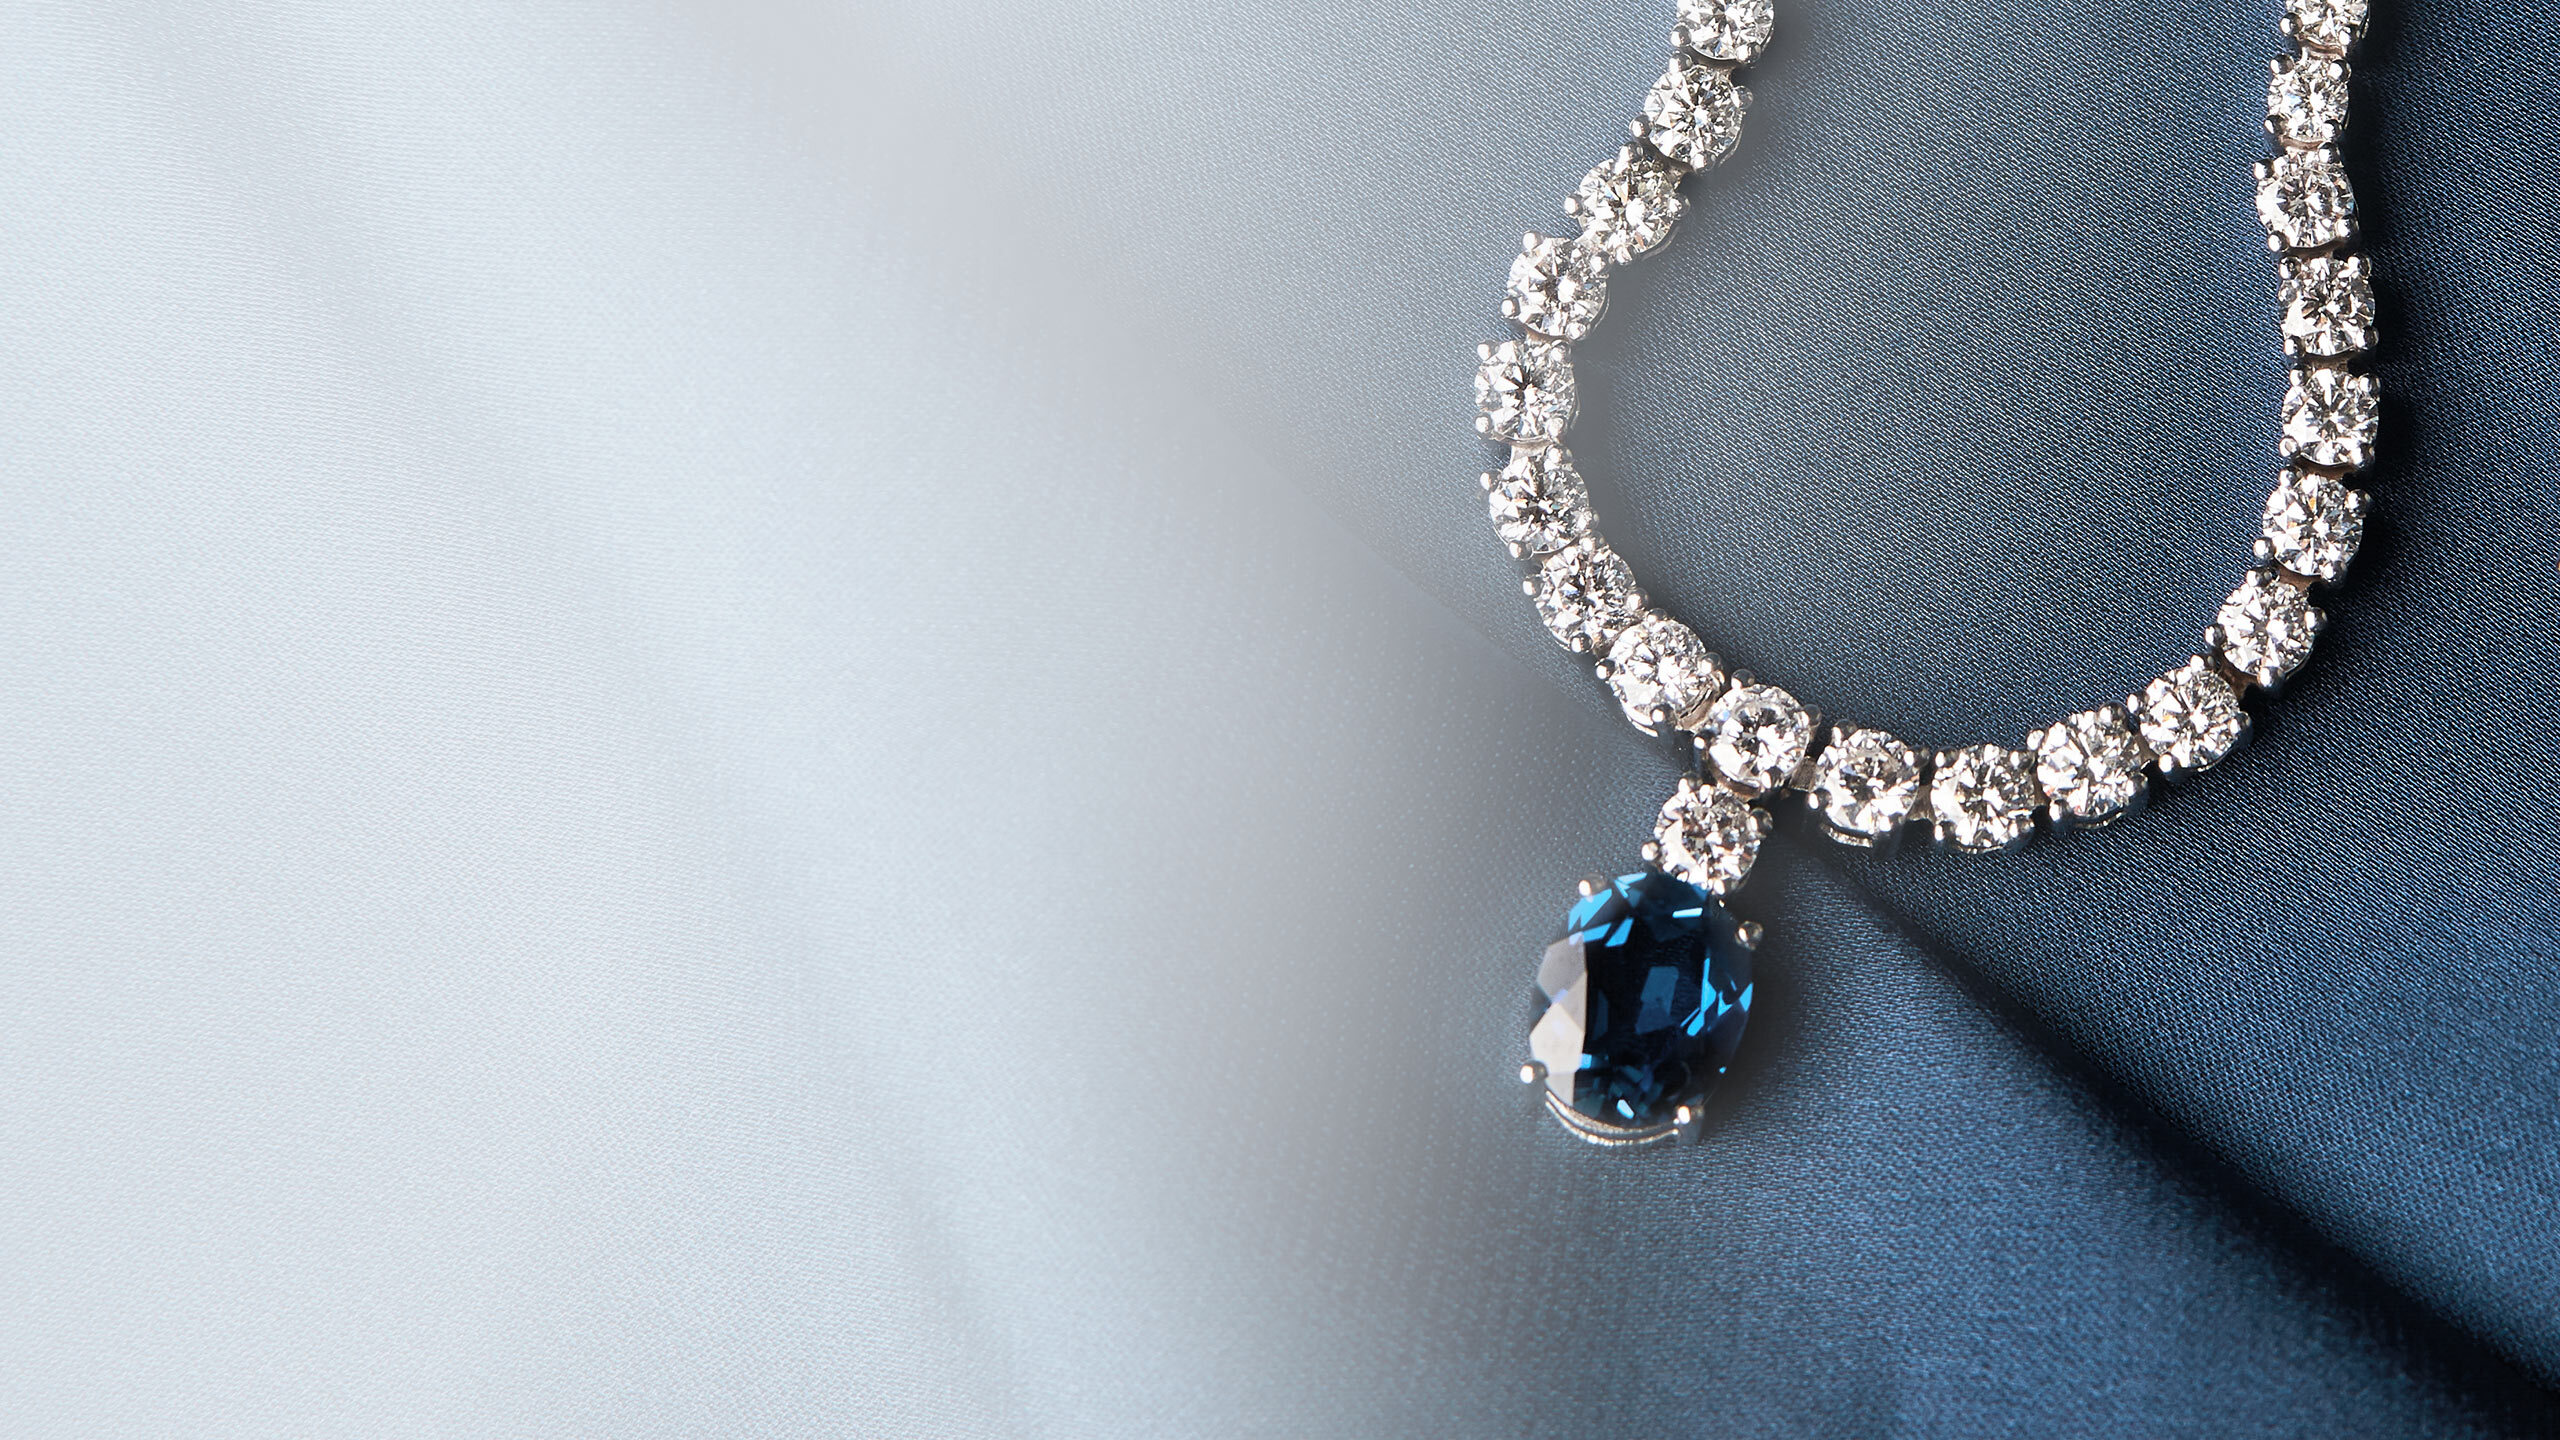 a diamond necklace with a blue sapphire pendant